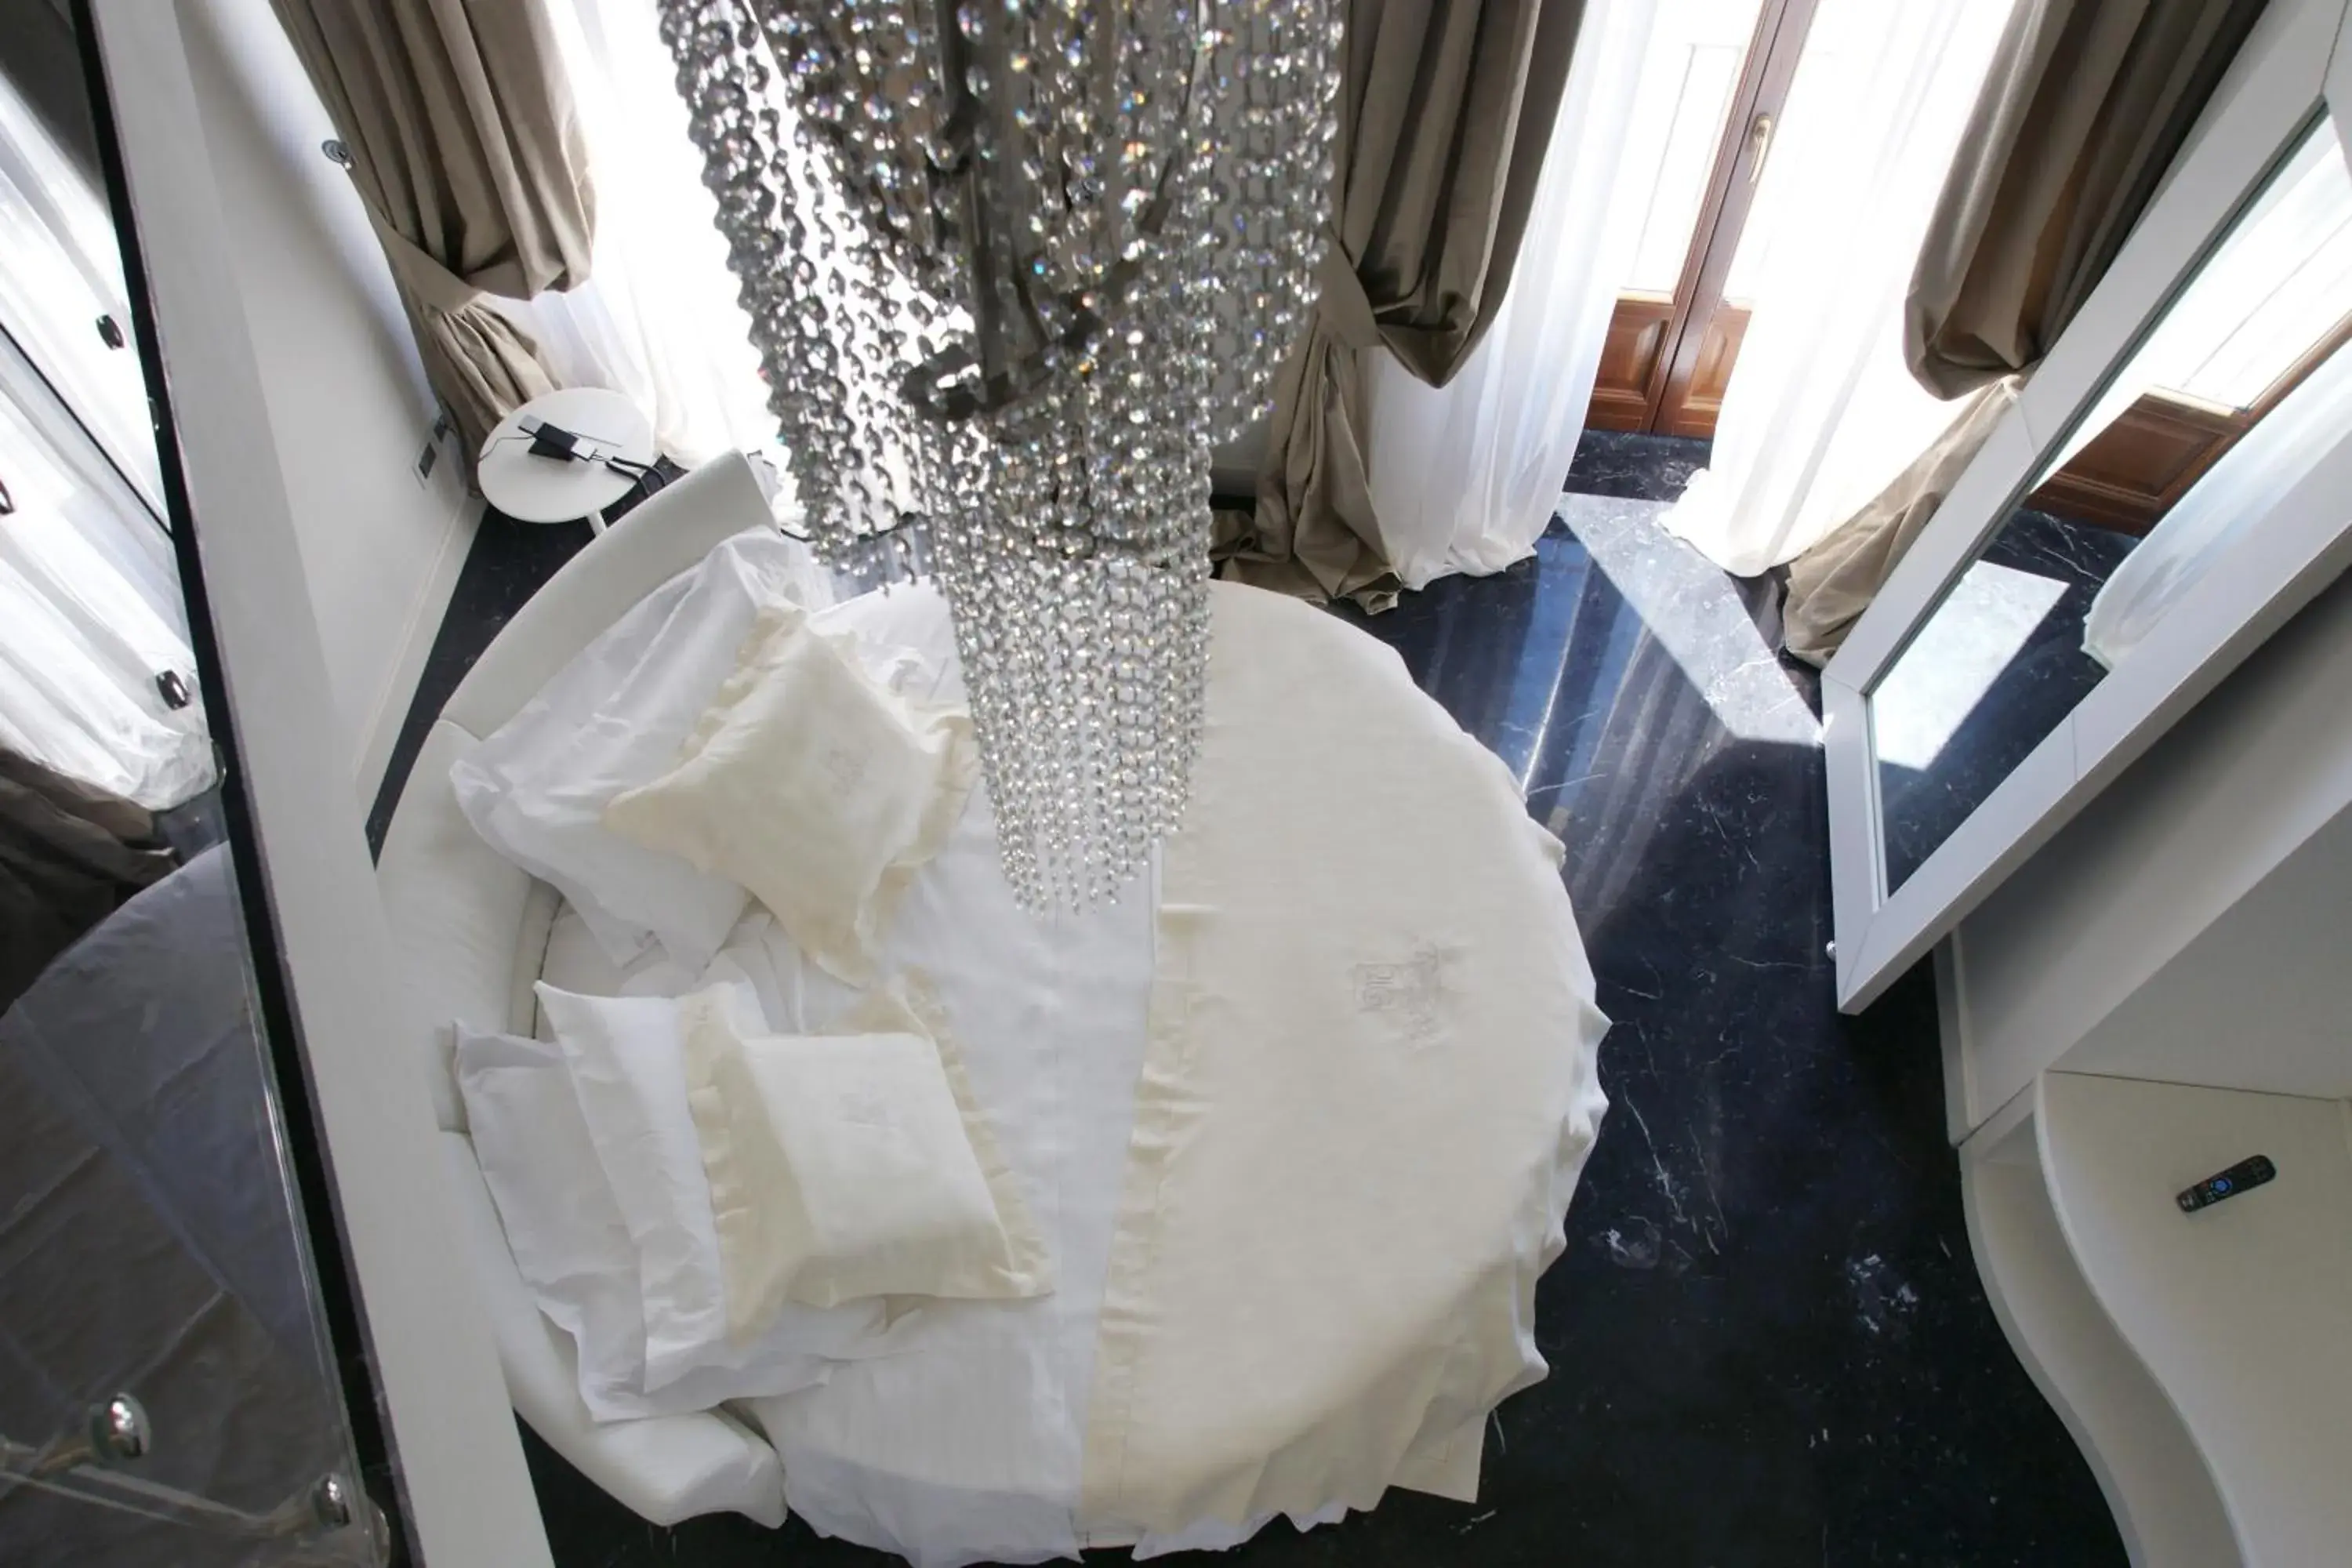 Photo of the whole room, Bathroom in Hotel Metropole Taormina